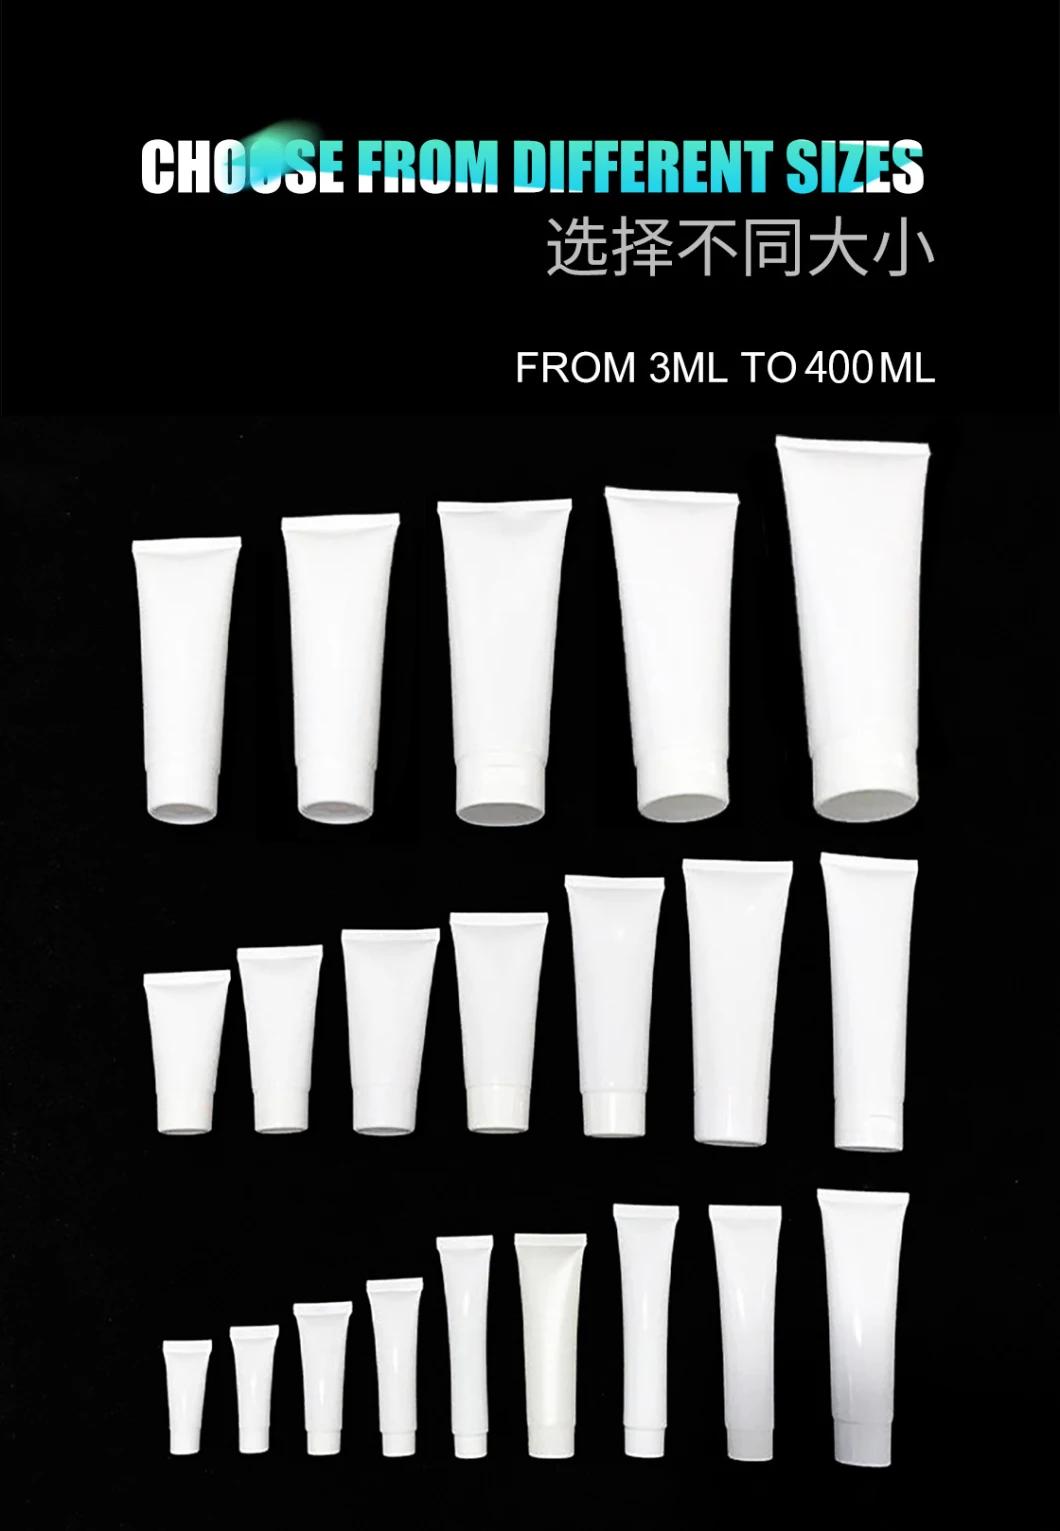 Custom Soft Round Flip Lid Cosmetic Cream Tube Plastic Packaging